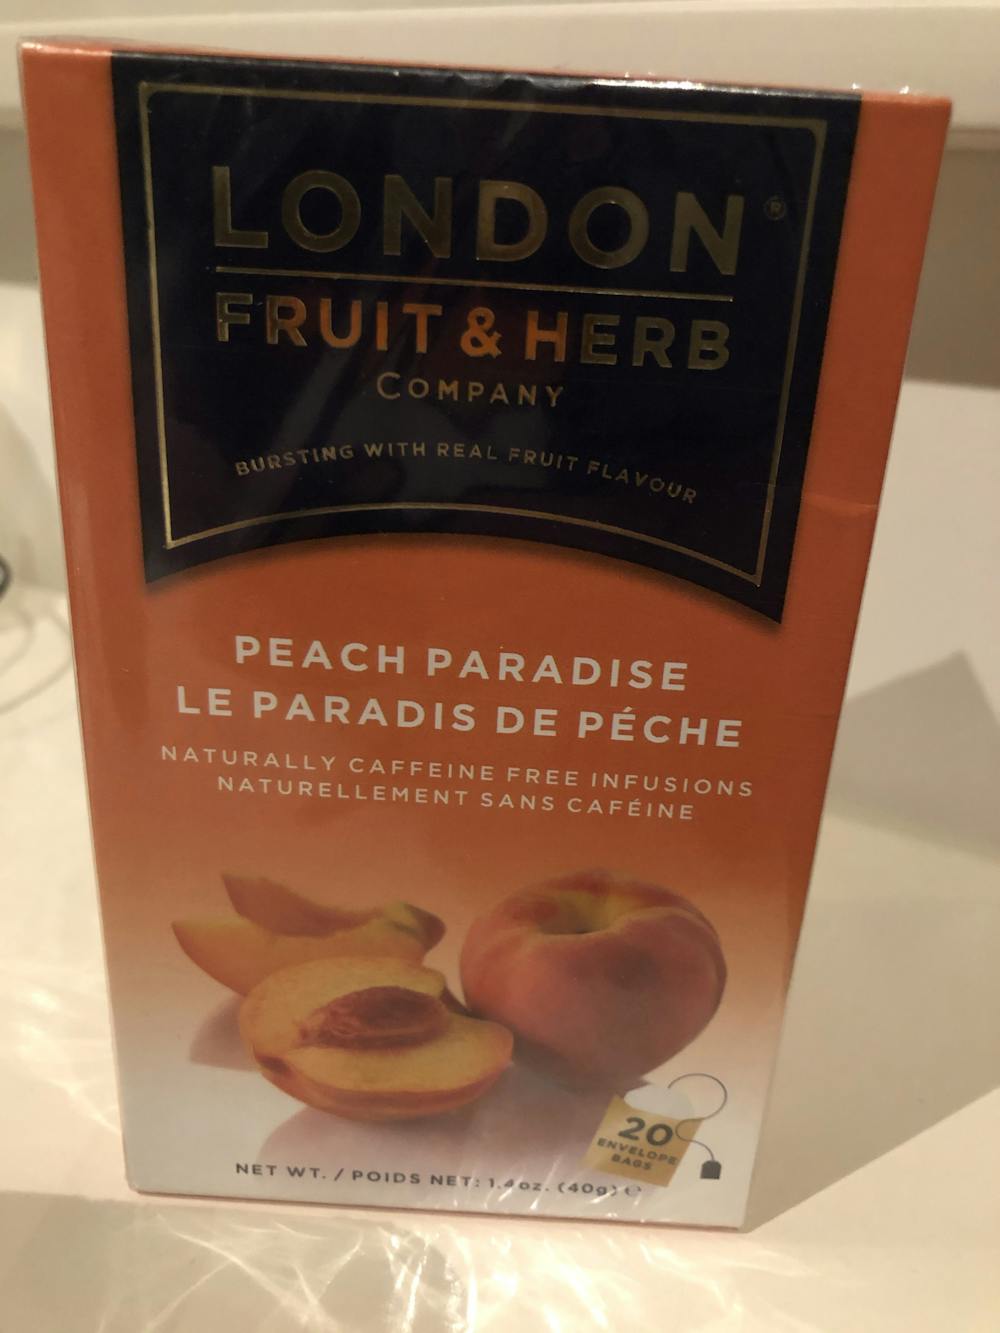 Peach paradise, London fruit & herb company